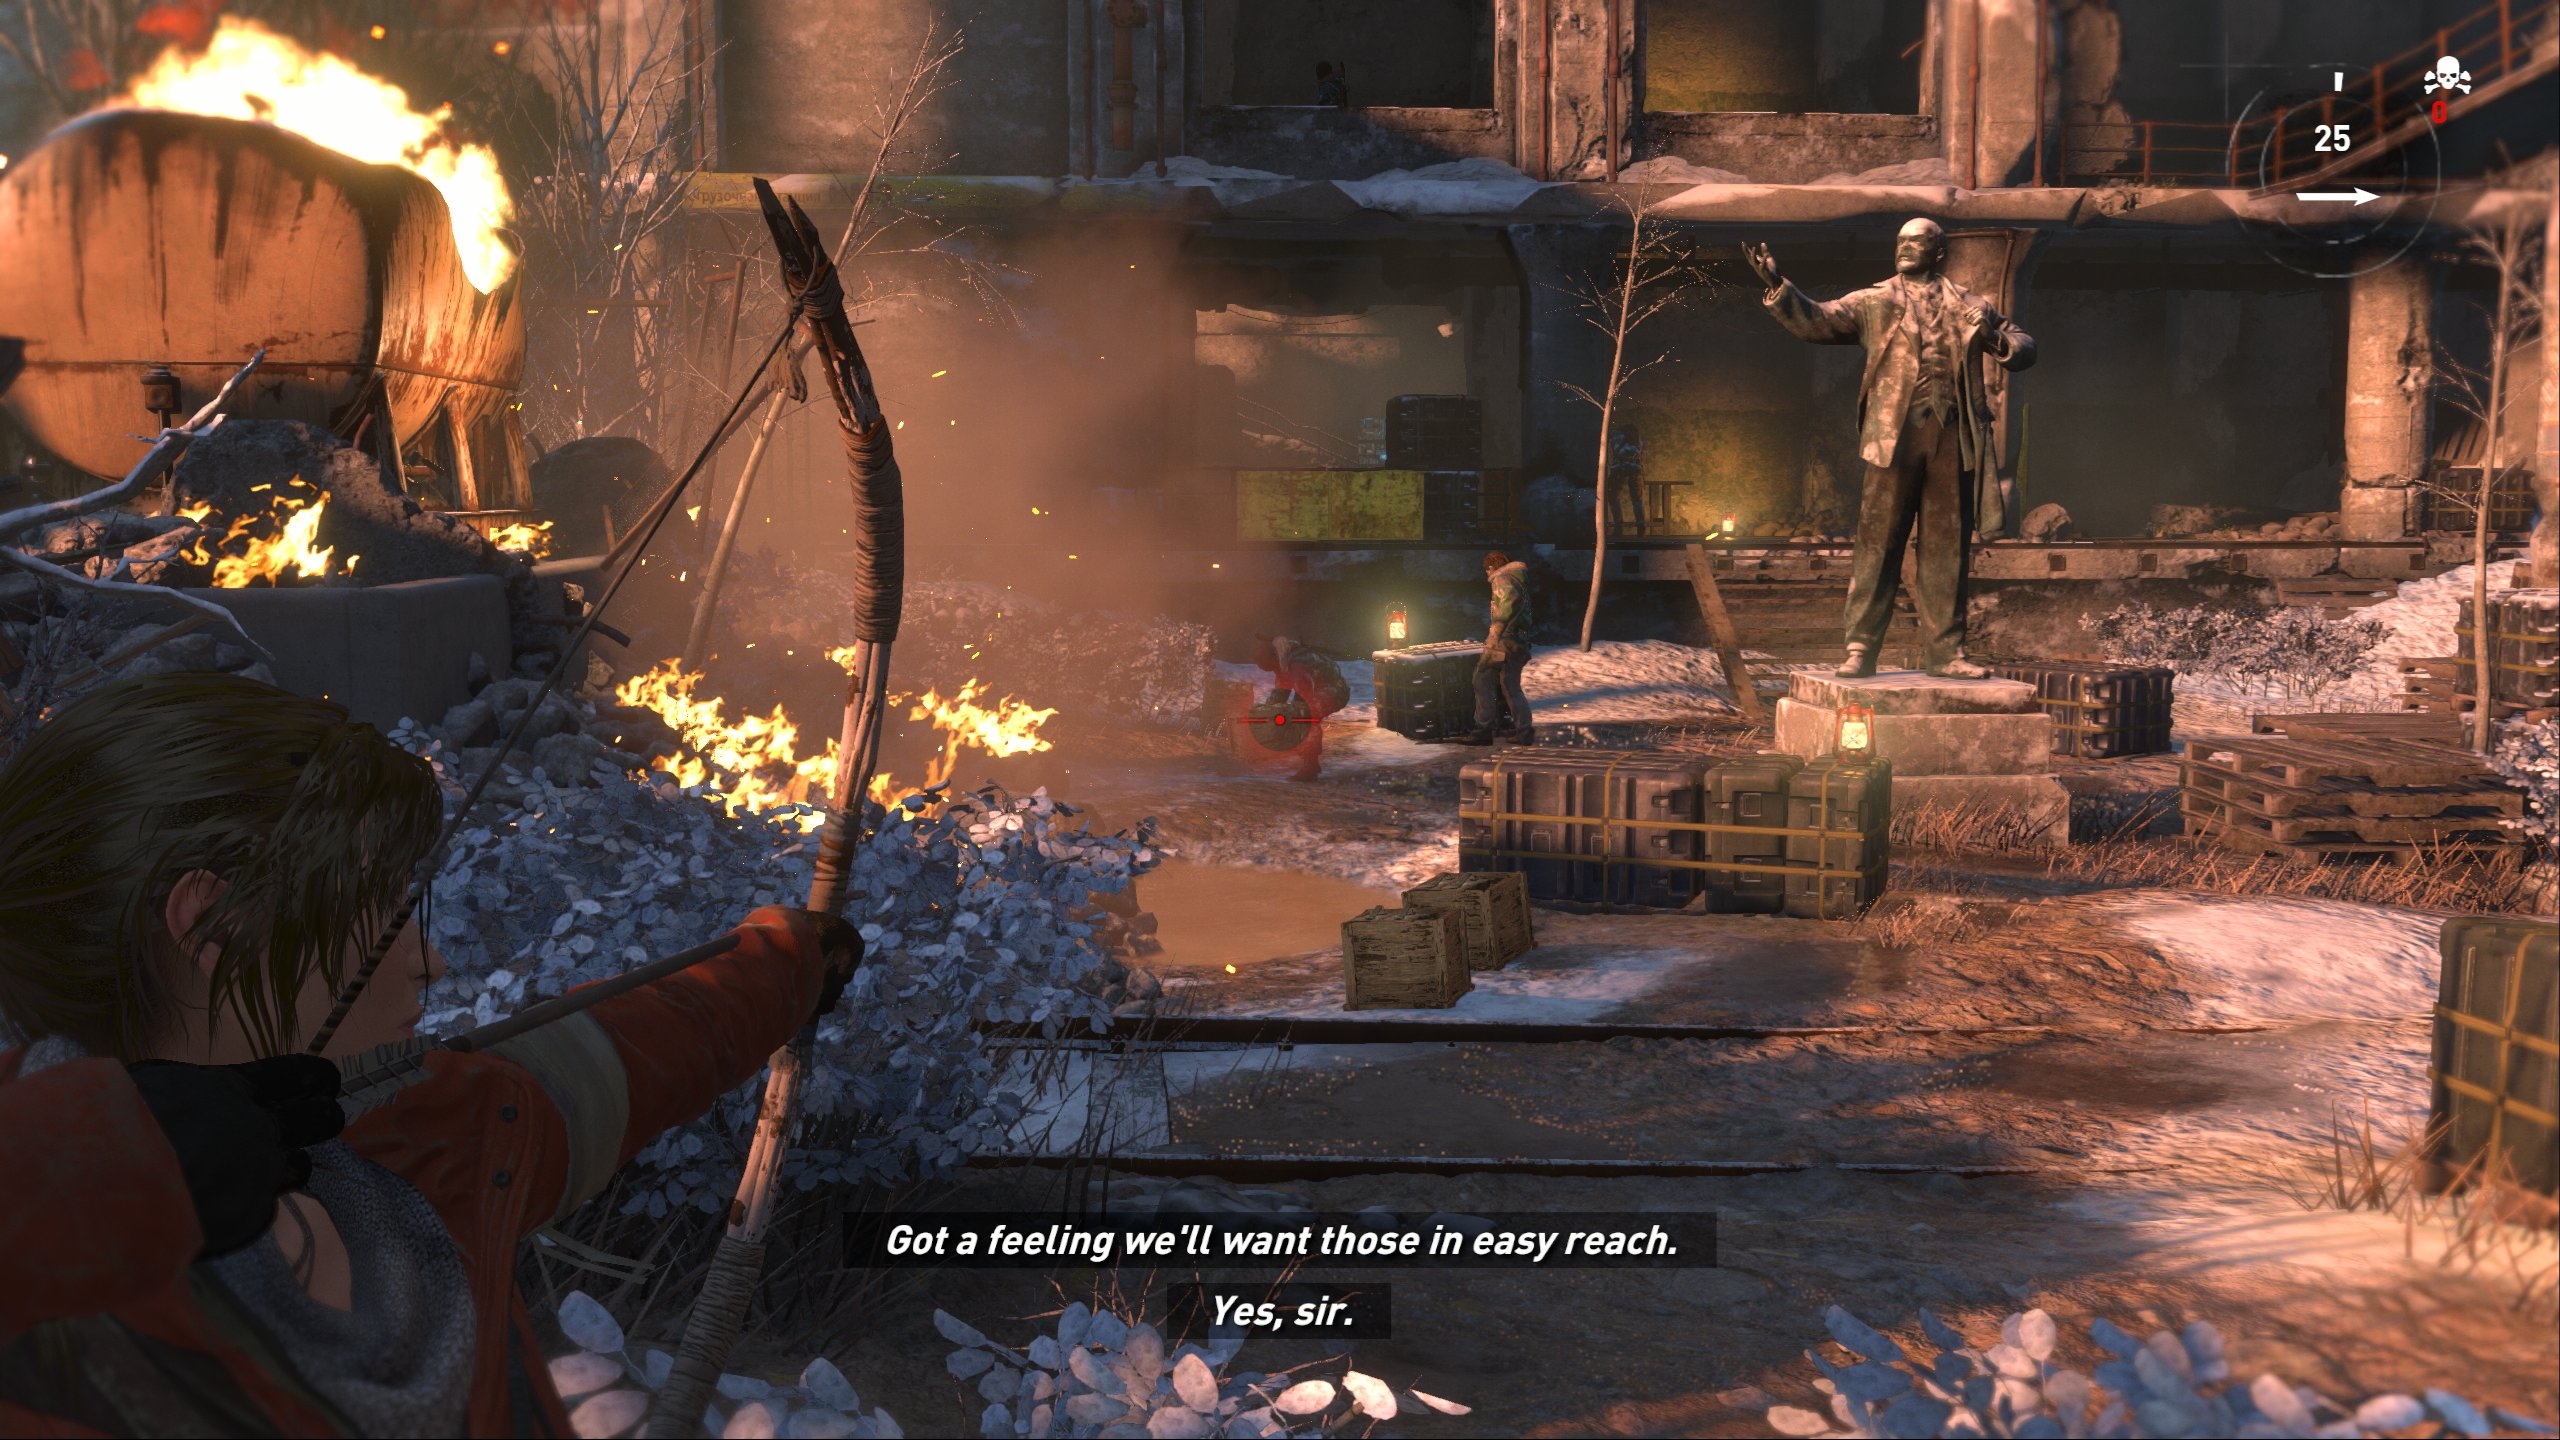 Rise of the Tomb Raider (PC) Boje v hre bud kombinova stealth a aj otvoren akciu.